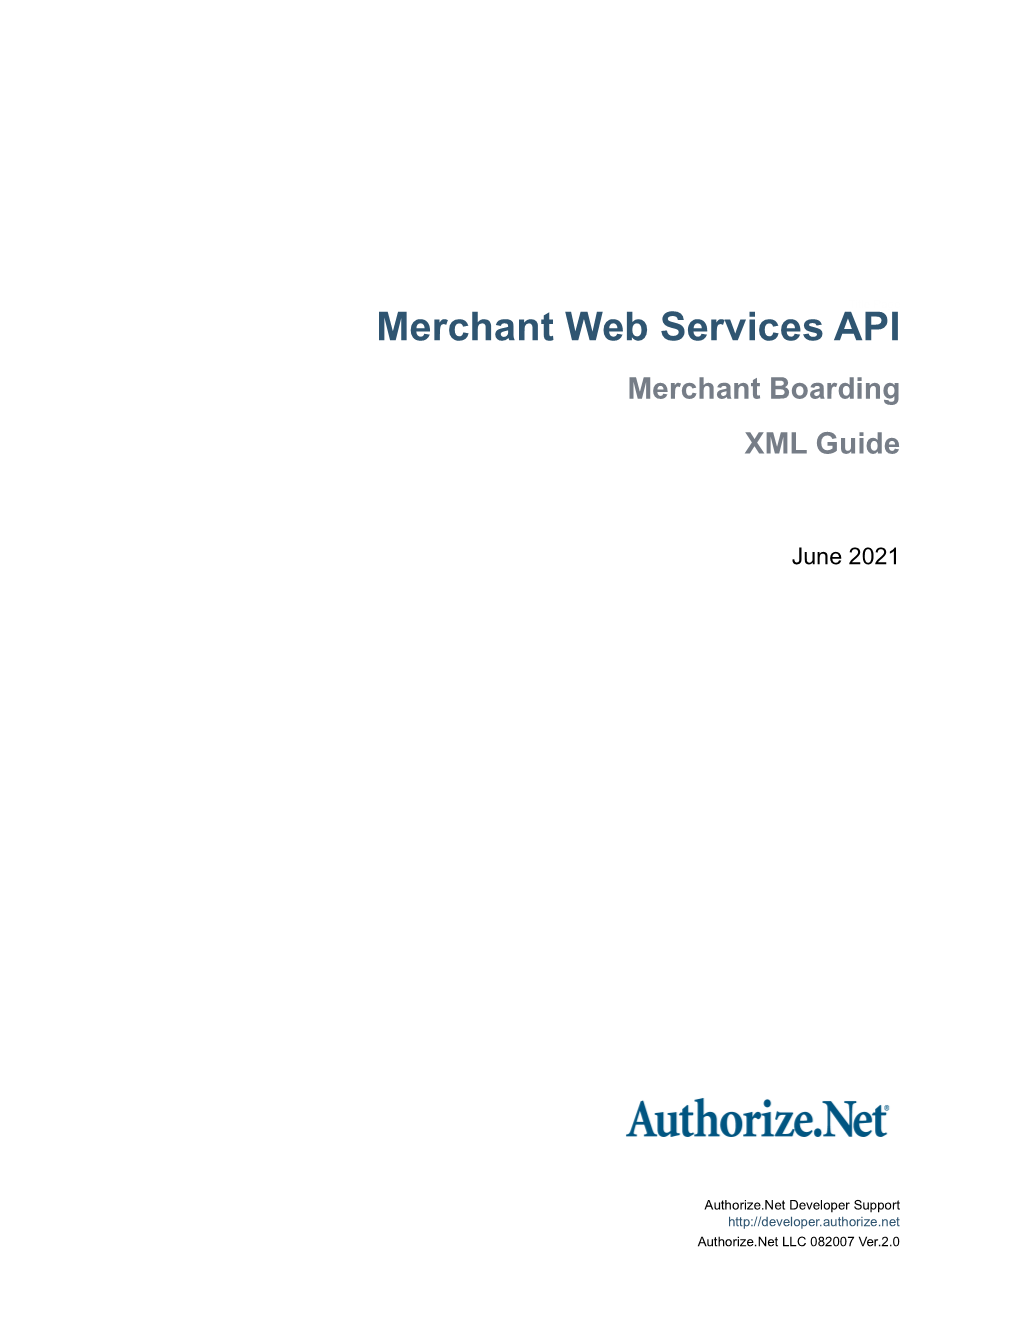 Merchant Web Services API Merchant Boarding XML Guide